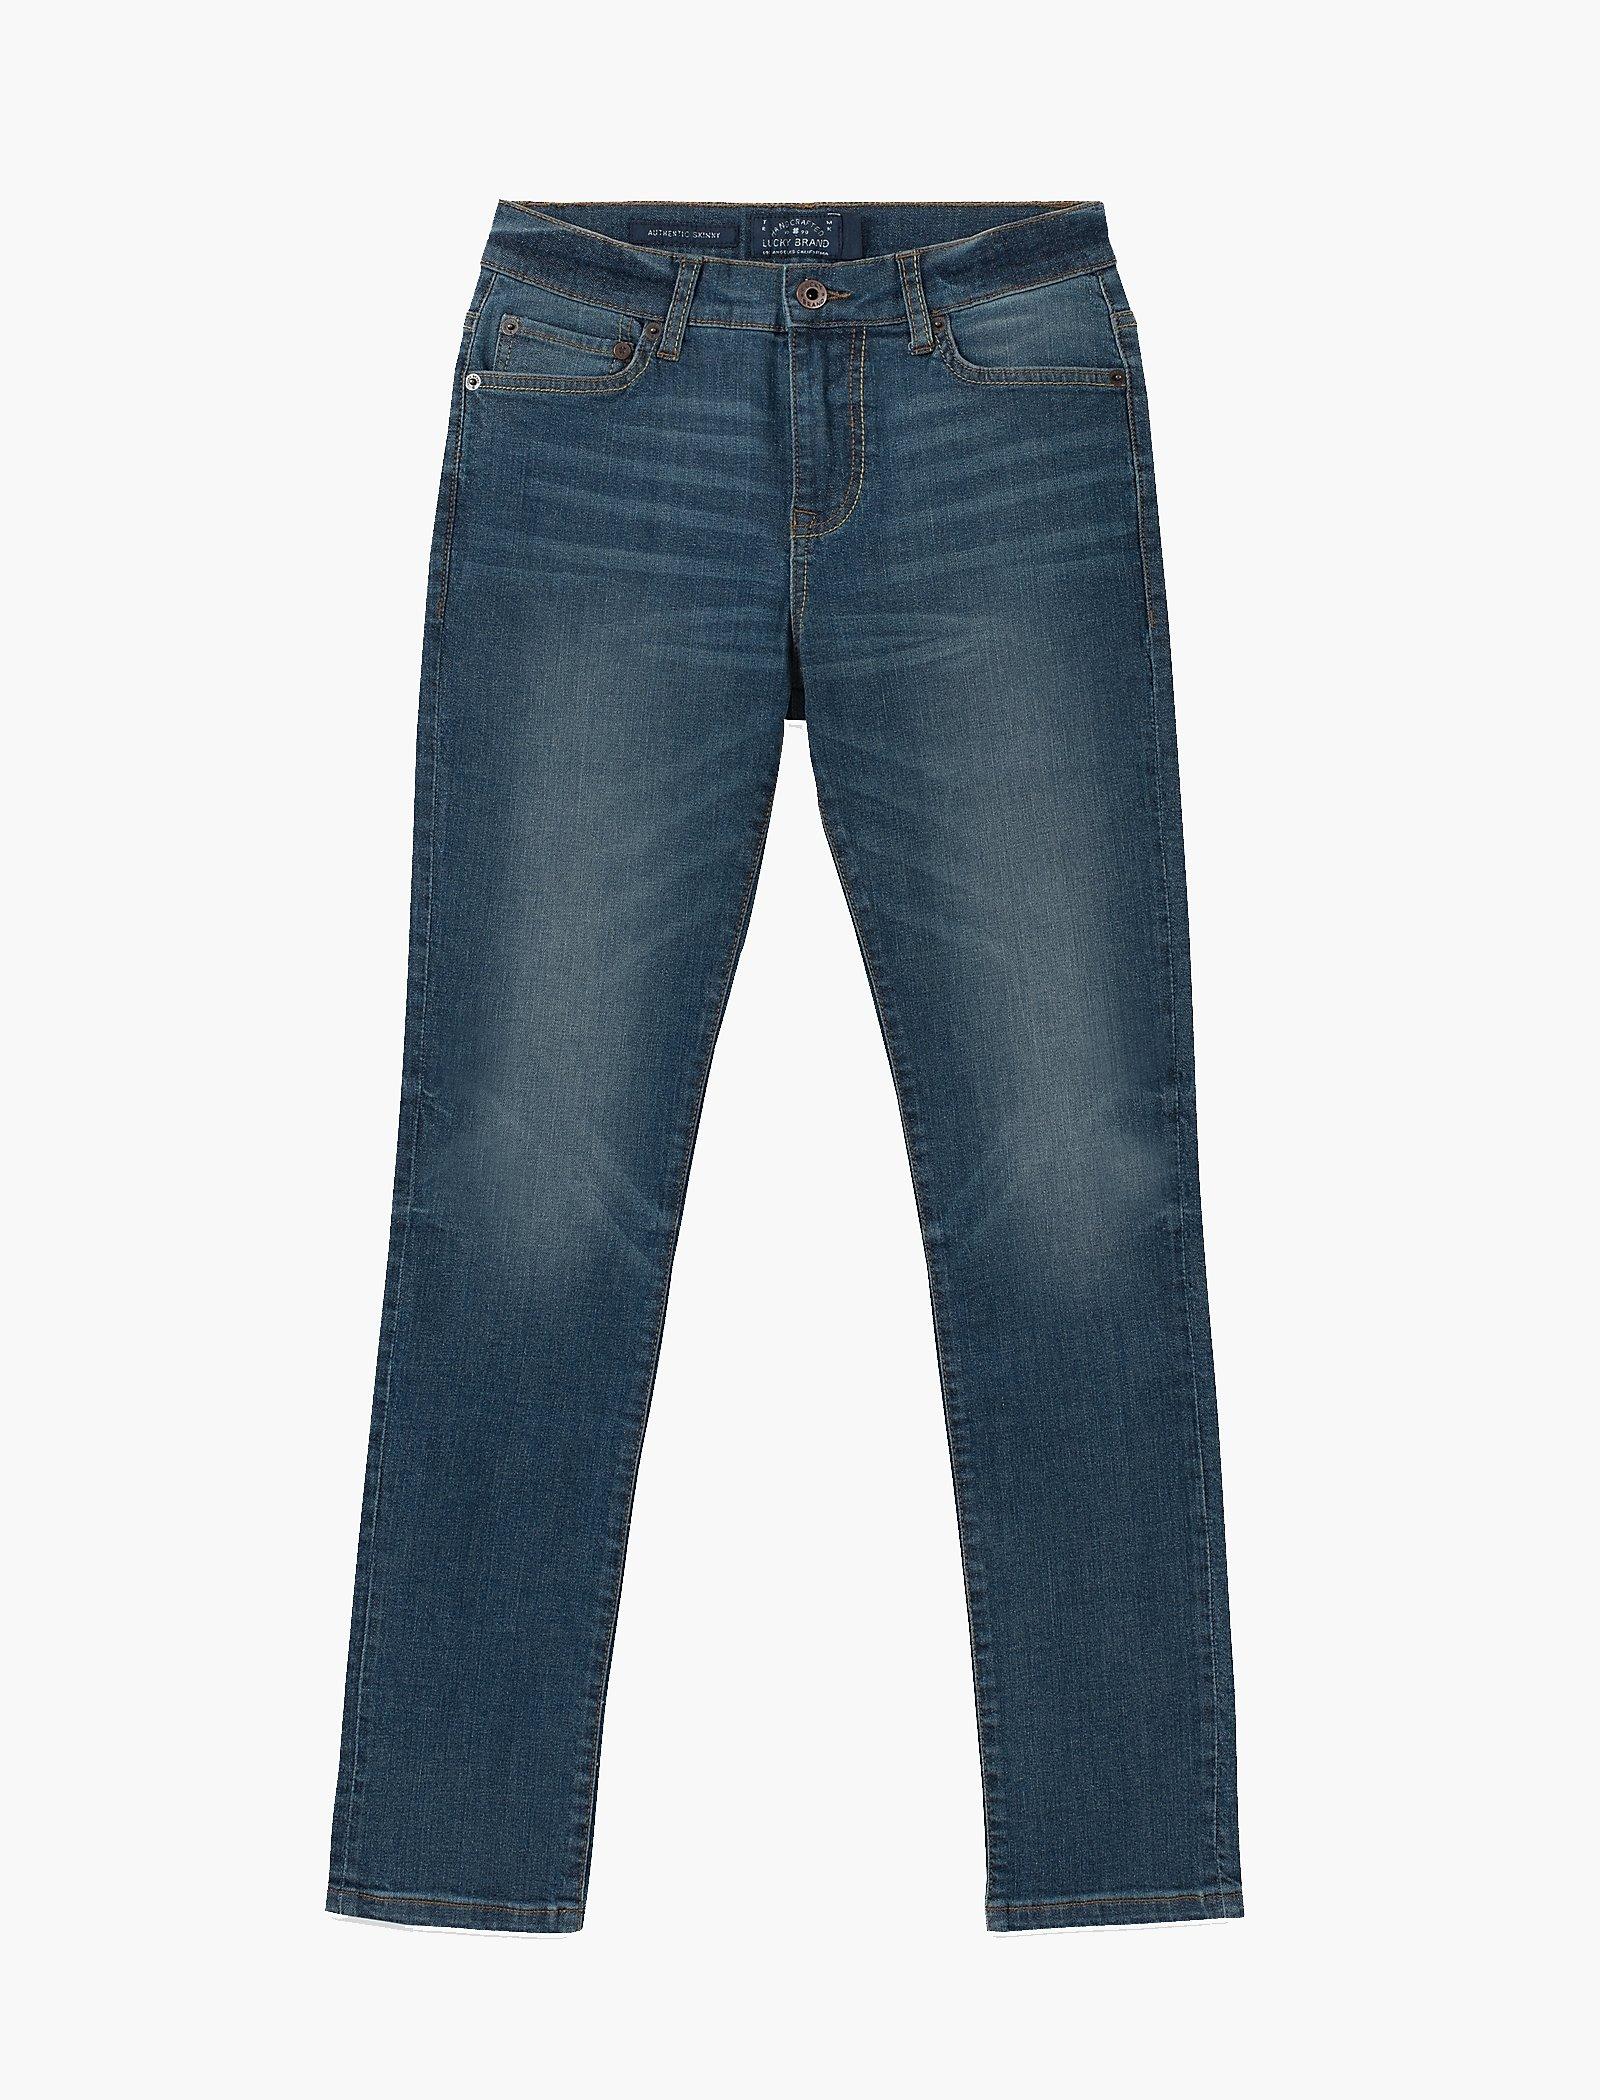 34 inch leg womens jeans